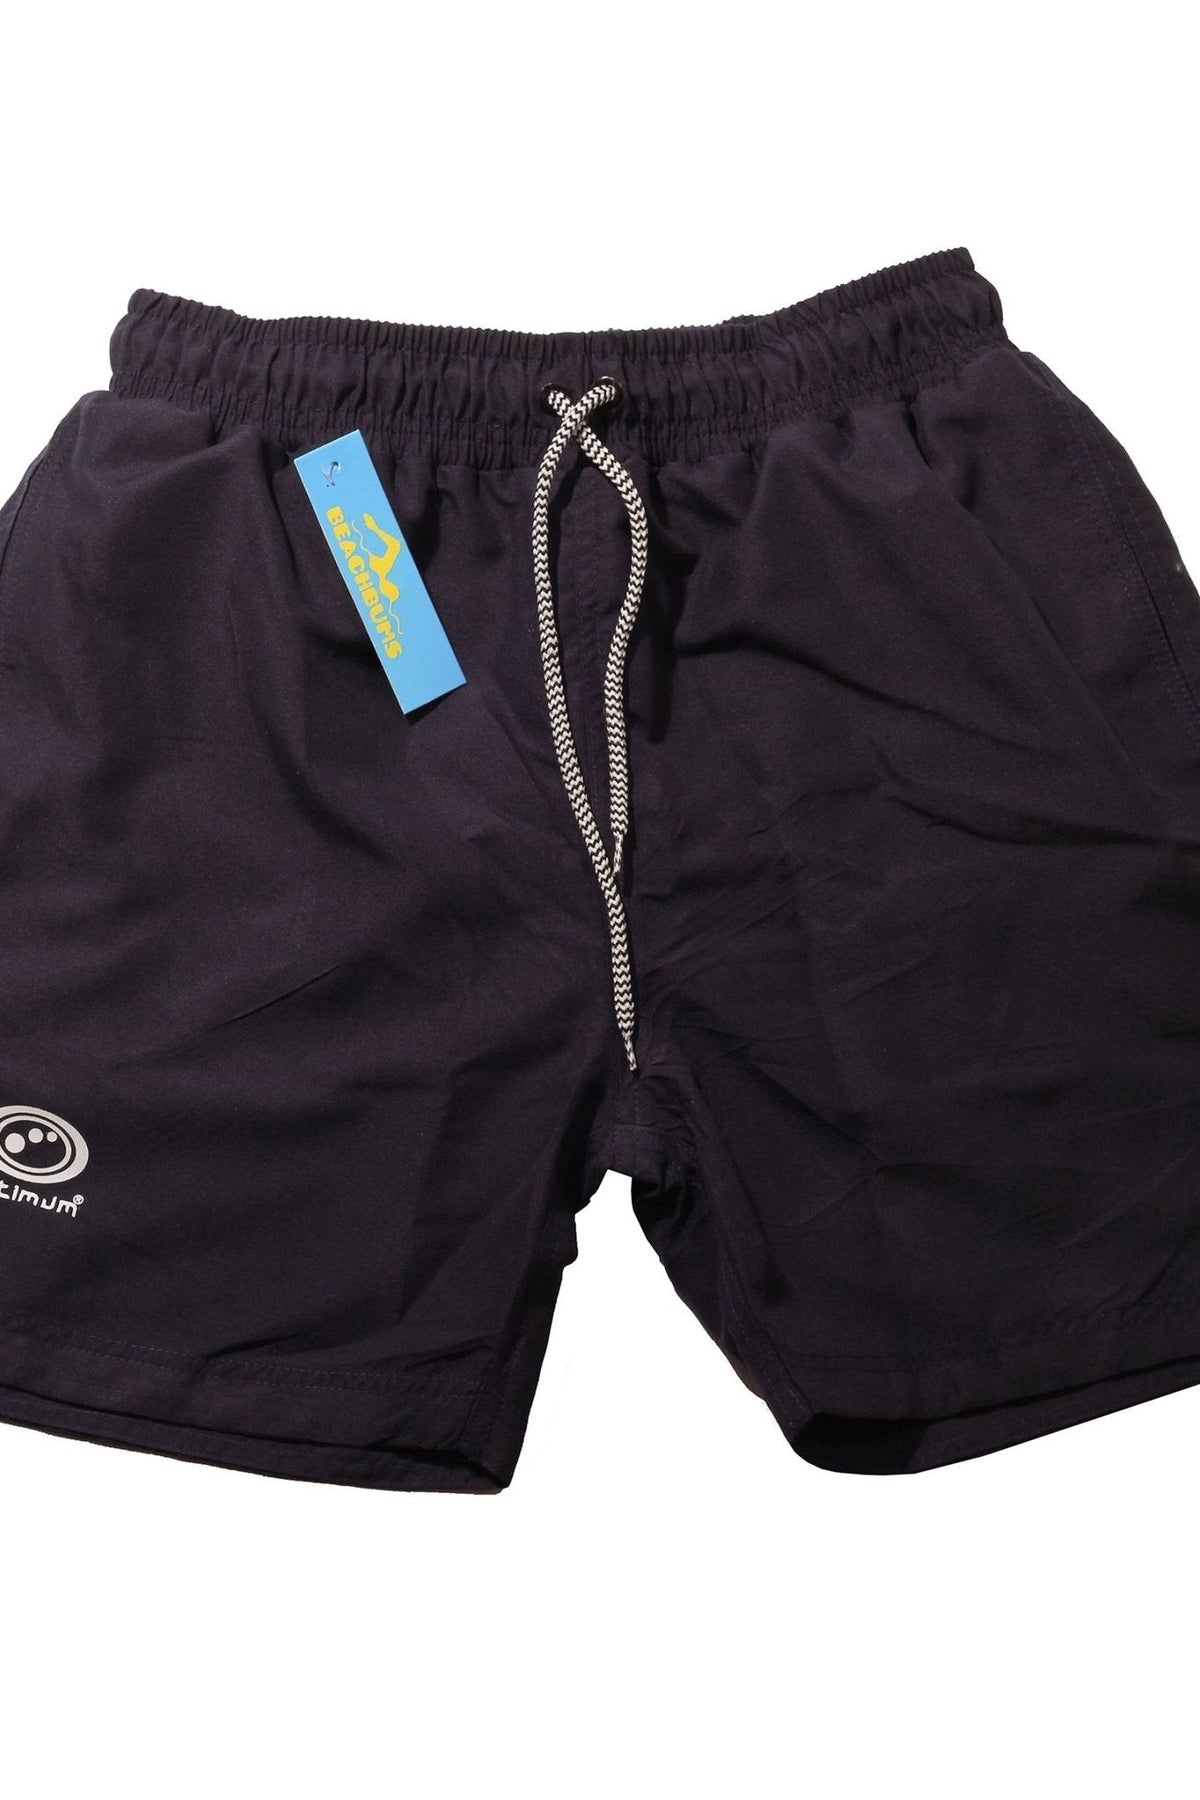 Beachbum Navy Mesh Shorts Polyester Elastic Pool Beach Wear - Optimum